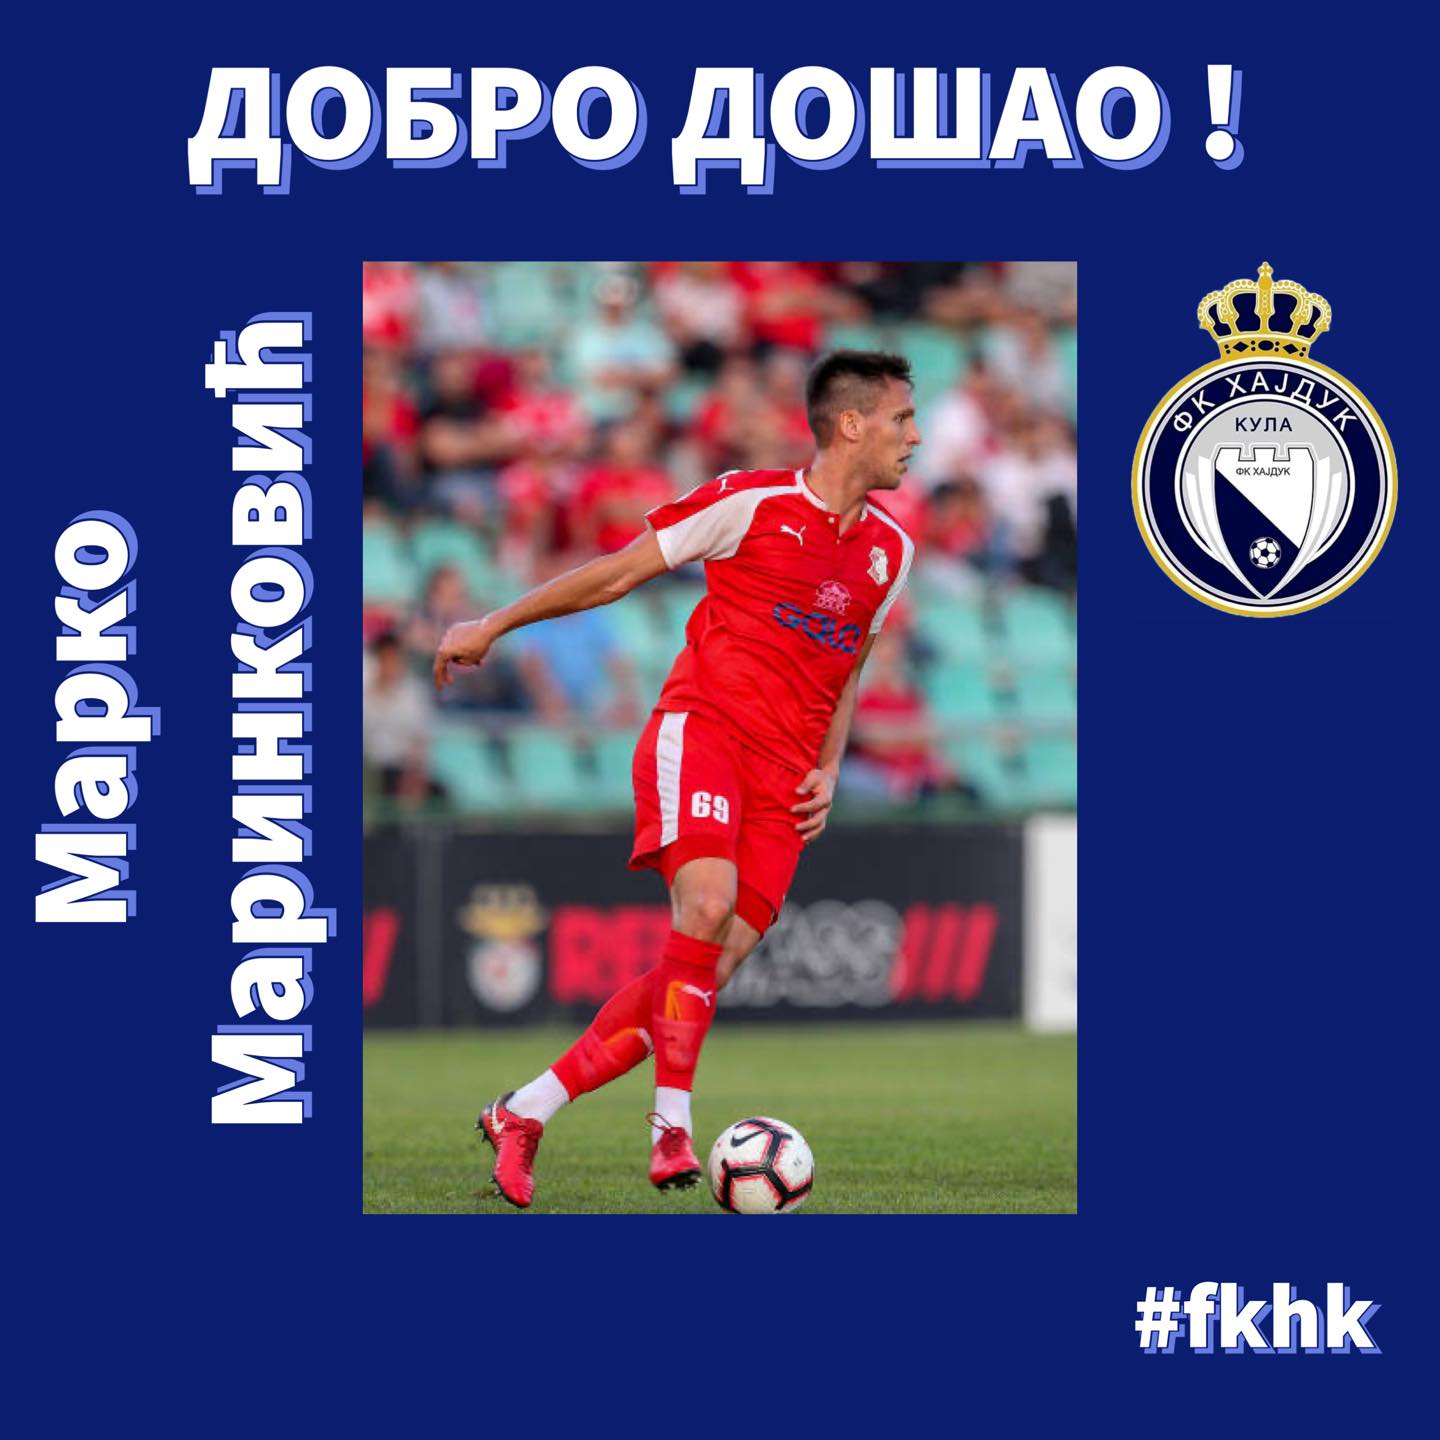 Marko Marinković FK Hajduk